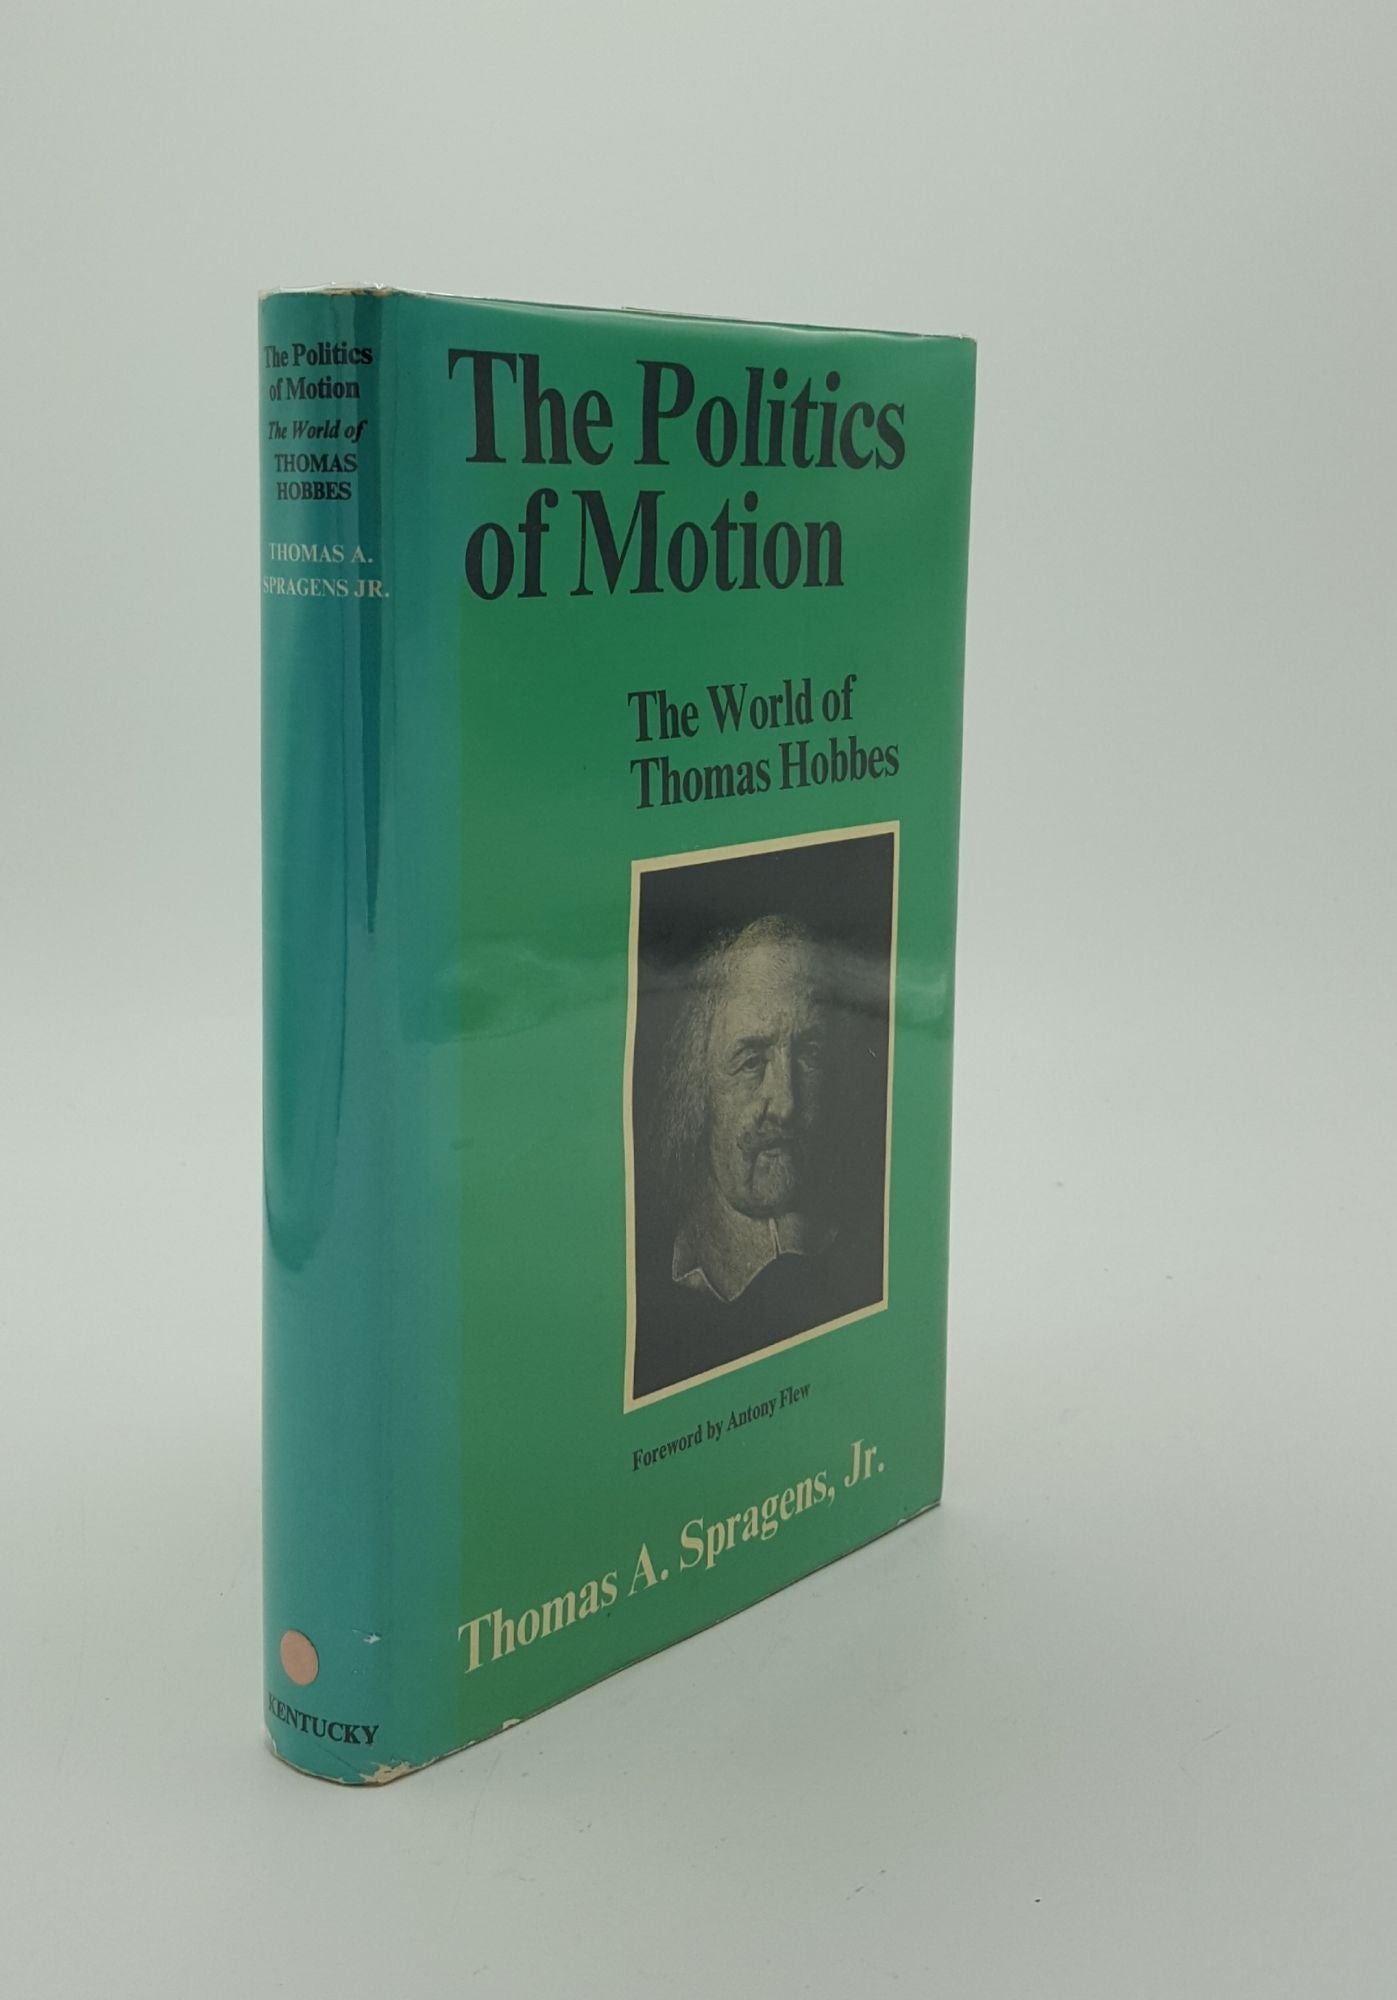 SPRAGEN Thomas A. - The Politics of Motion the World of Thomas Hobbes